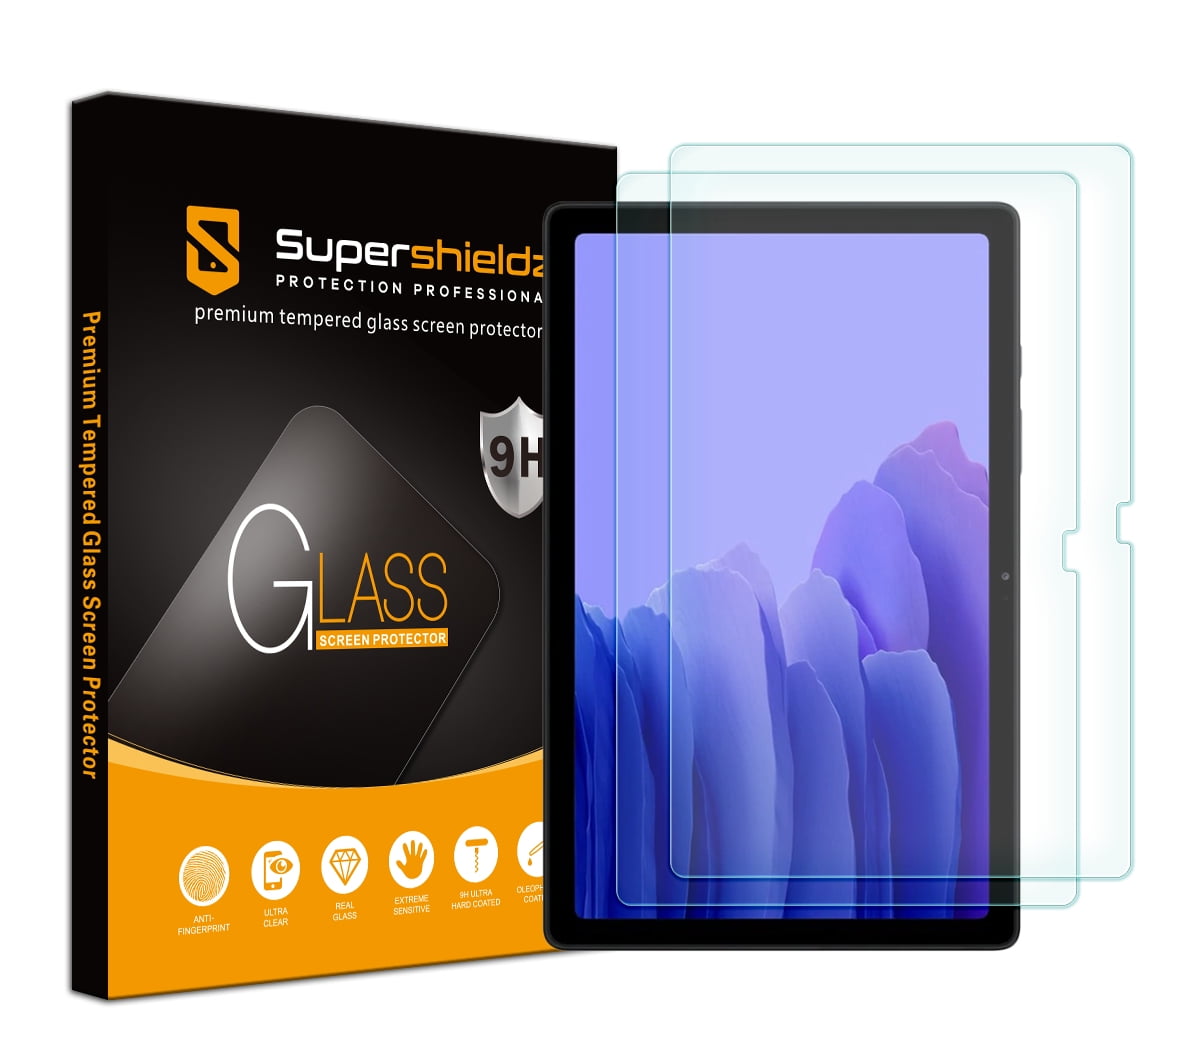 Supershieldz-Tempered Glass Screen Protector For Samsung Galaxy Tab E Lite 7.0 